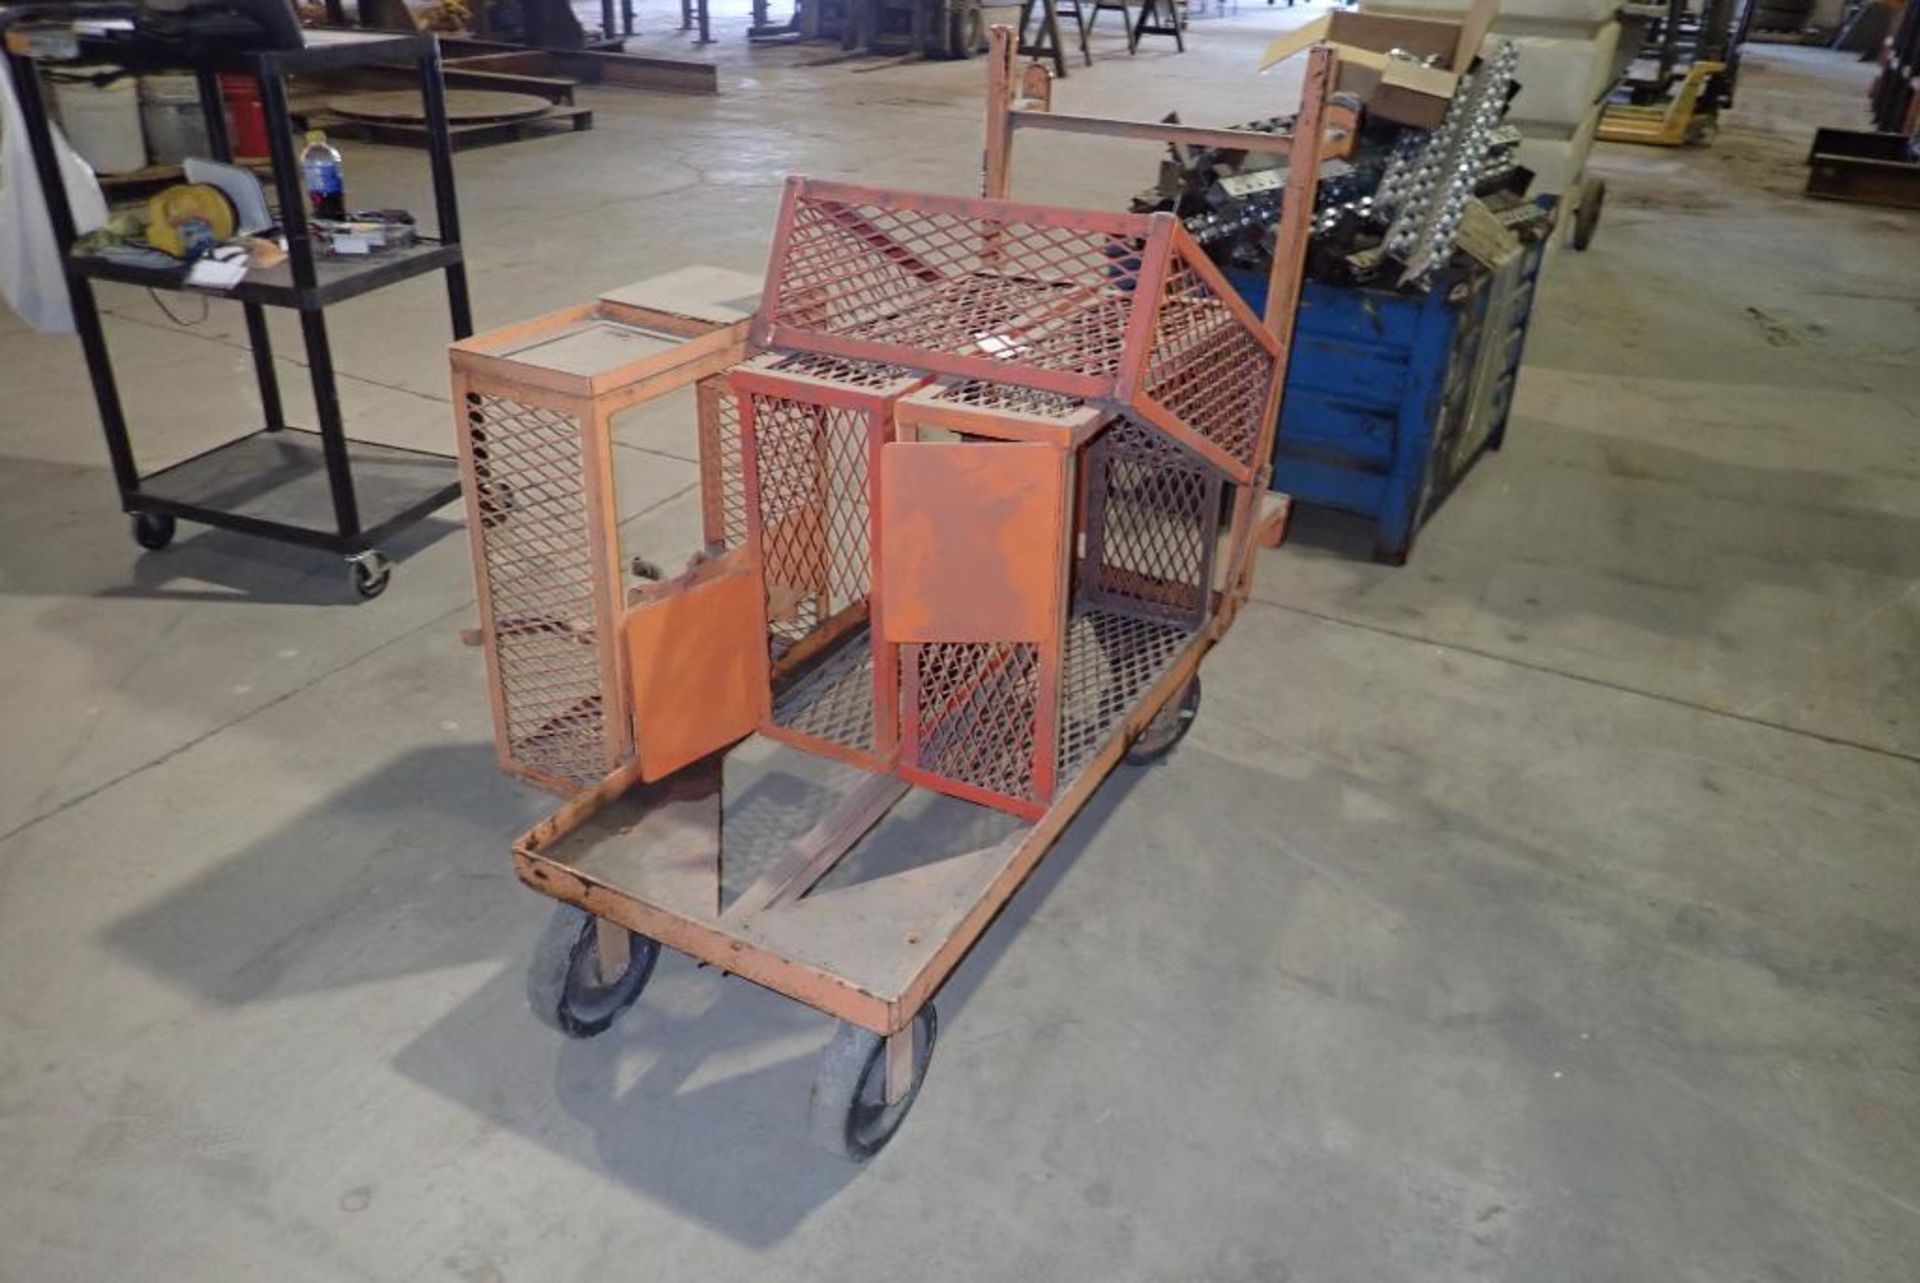 Shop Built Welding Cart. - Image 2 of 2